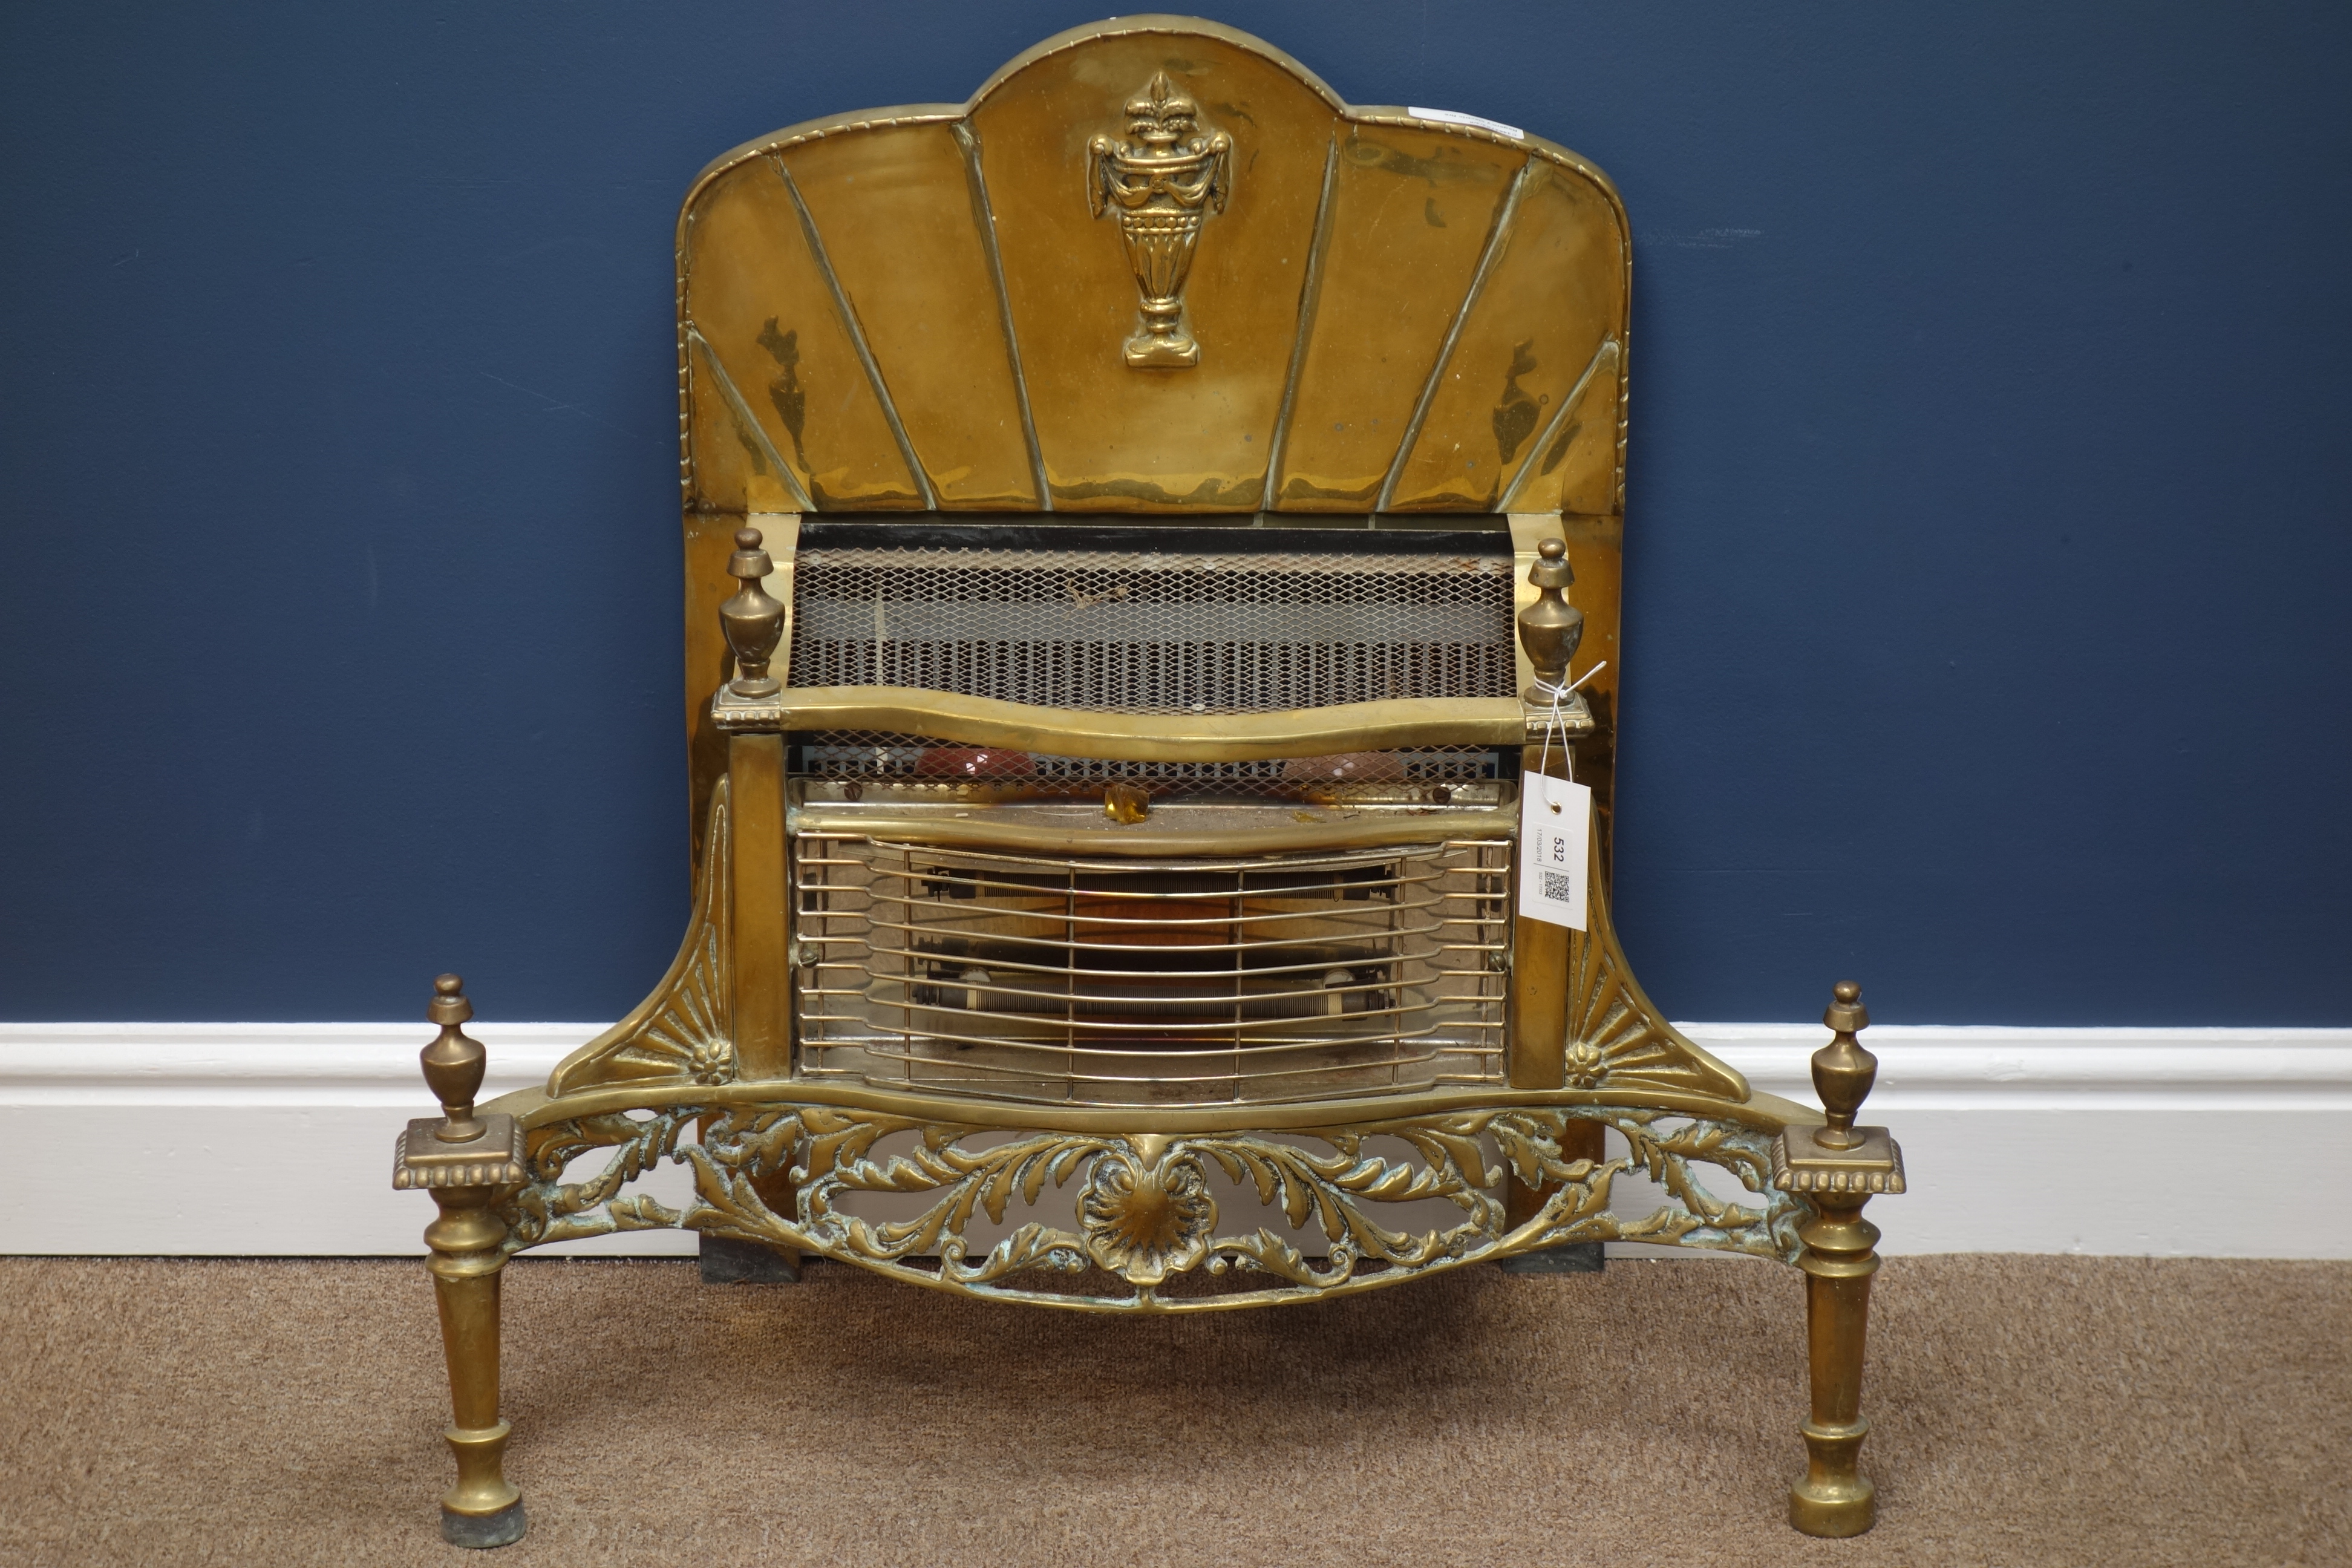 Regency style gilt metal electric fire basket, raised back with moulded urn motif, W67cm,